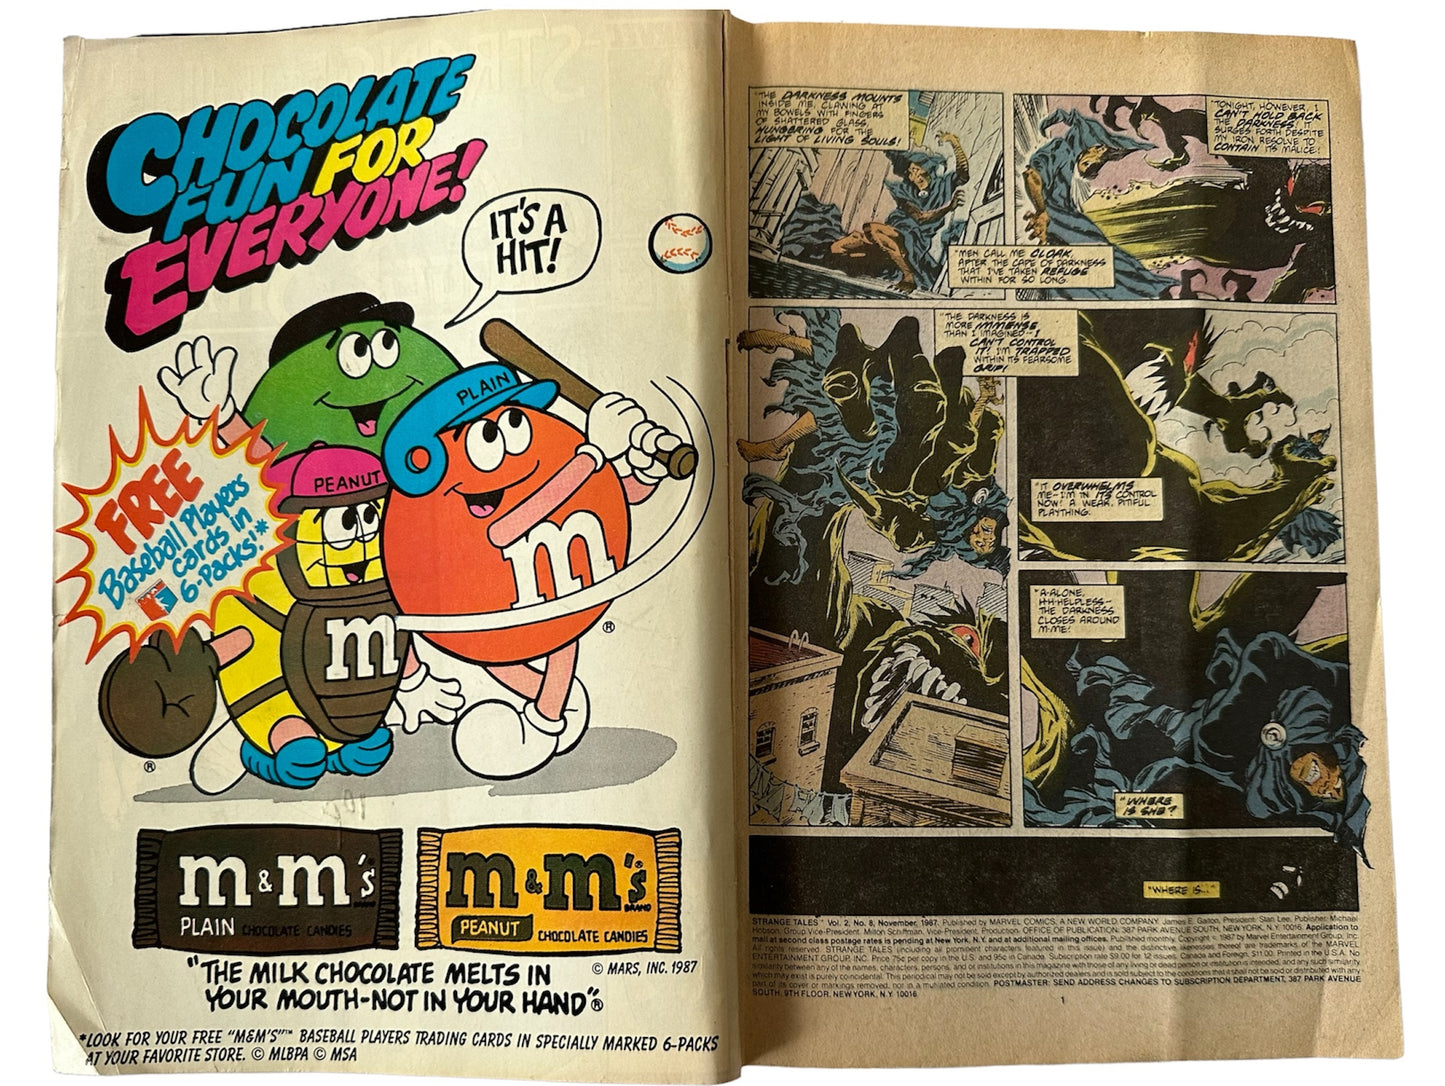 Vintage 1987 Marvels - Strange Tales Comic Issue Number 8 - Featuring Cloak And Dagger & Doctor Strange - Good Condition Vintage Comic